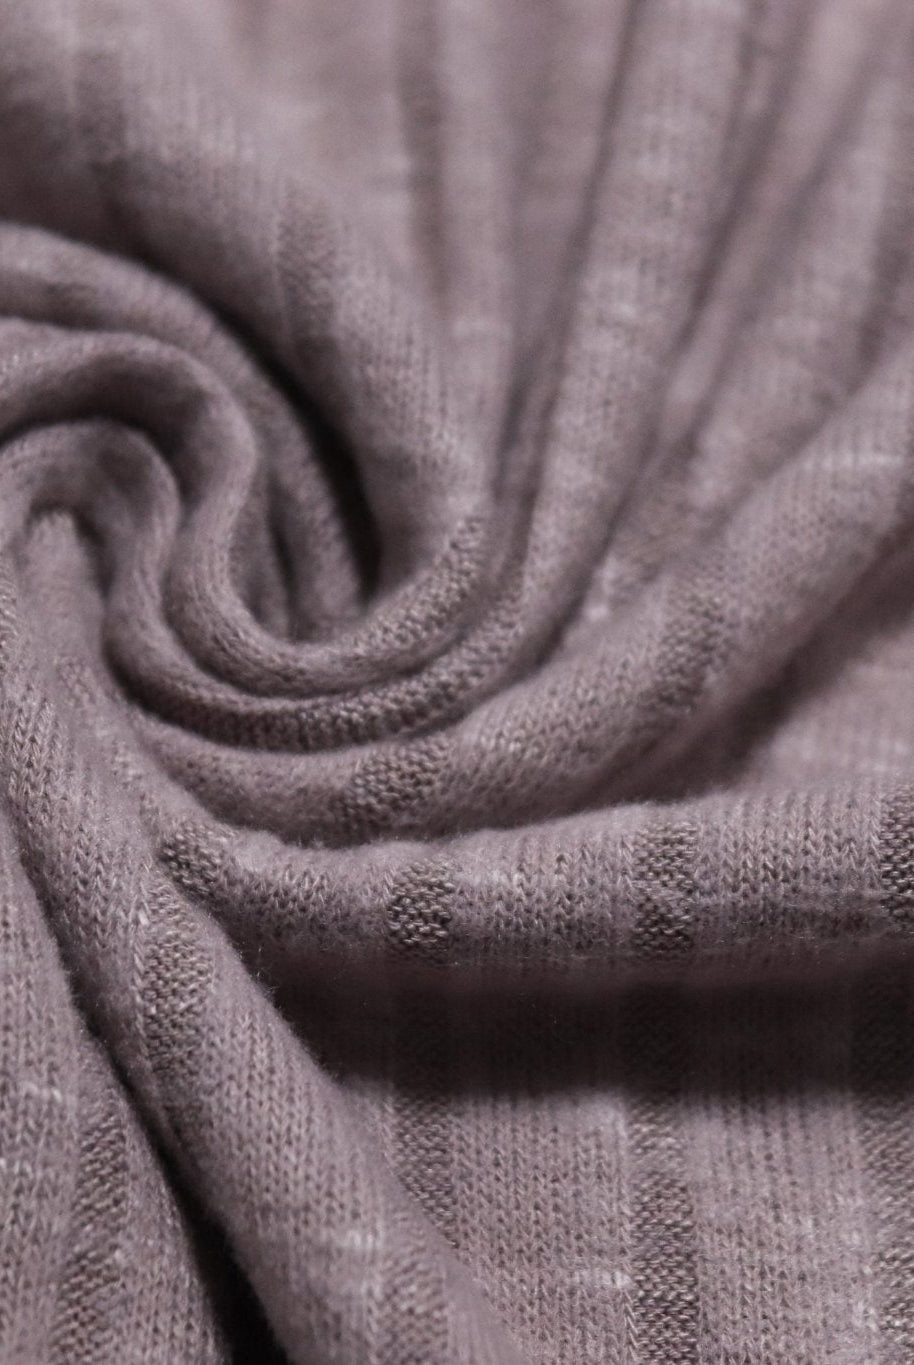 Light Lilac 9x4 Brushed Rib Knit Fabric. BRIB-201-PURP - Boho Fabrics